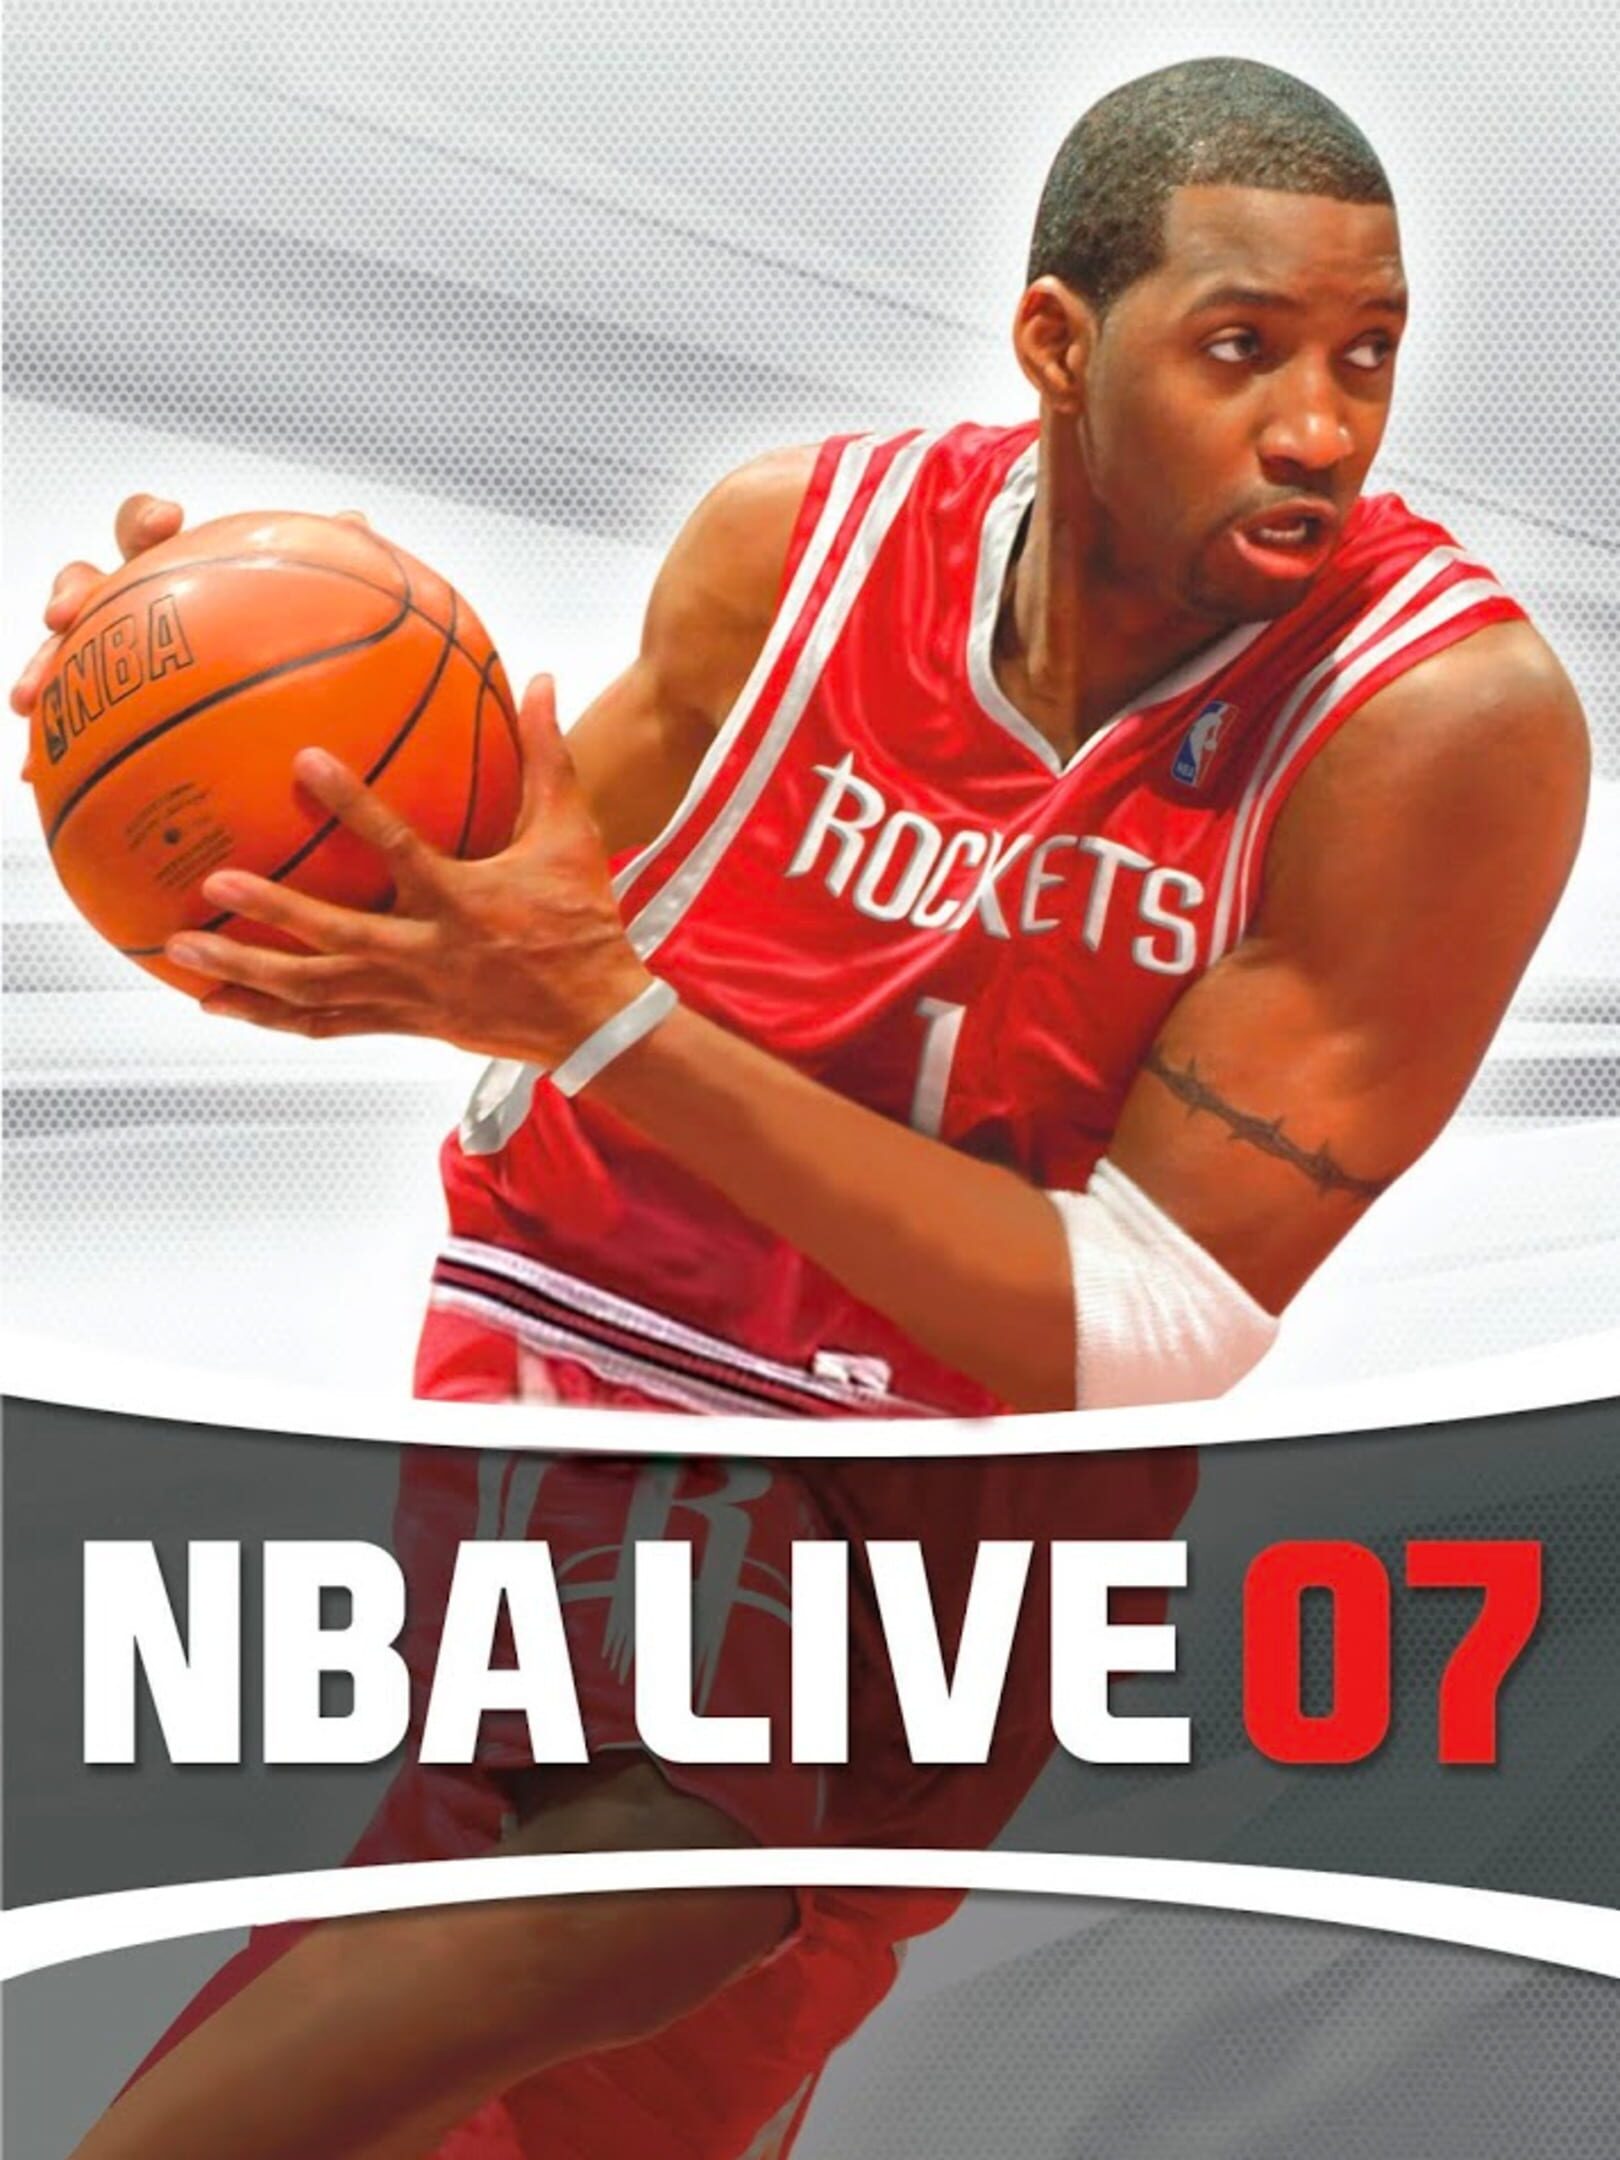 NBA Live 07 News, Guides, Walkthrough, Screenshots, and Reviews